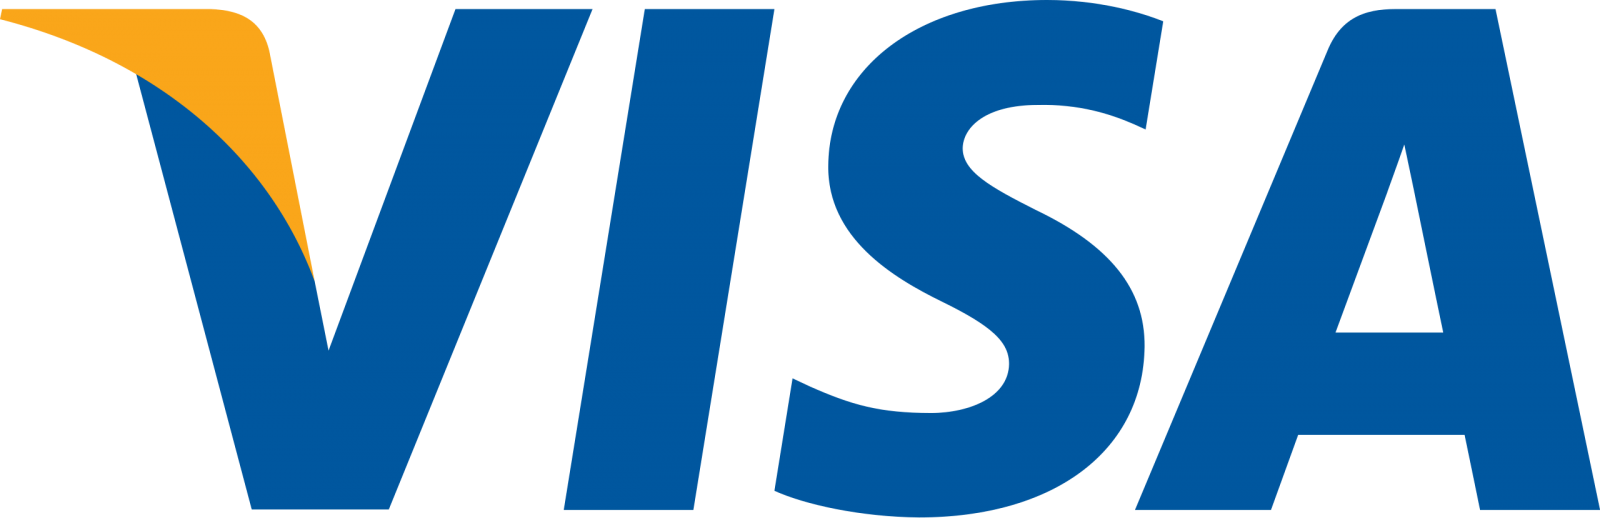 Visa Inc. logo.svg ❤ DOOKOŁAOKA